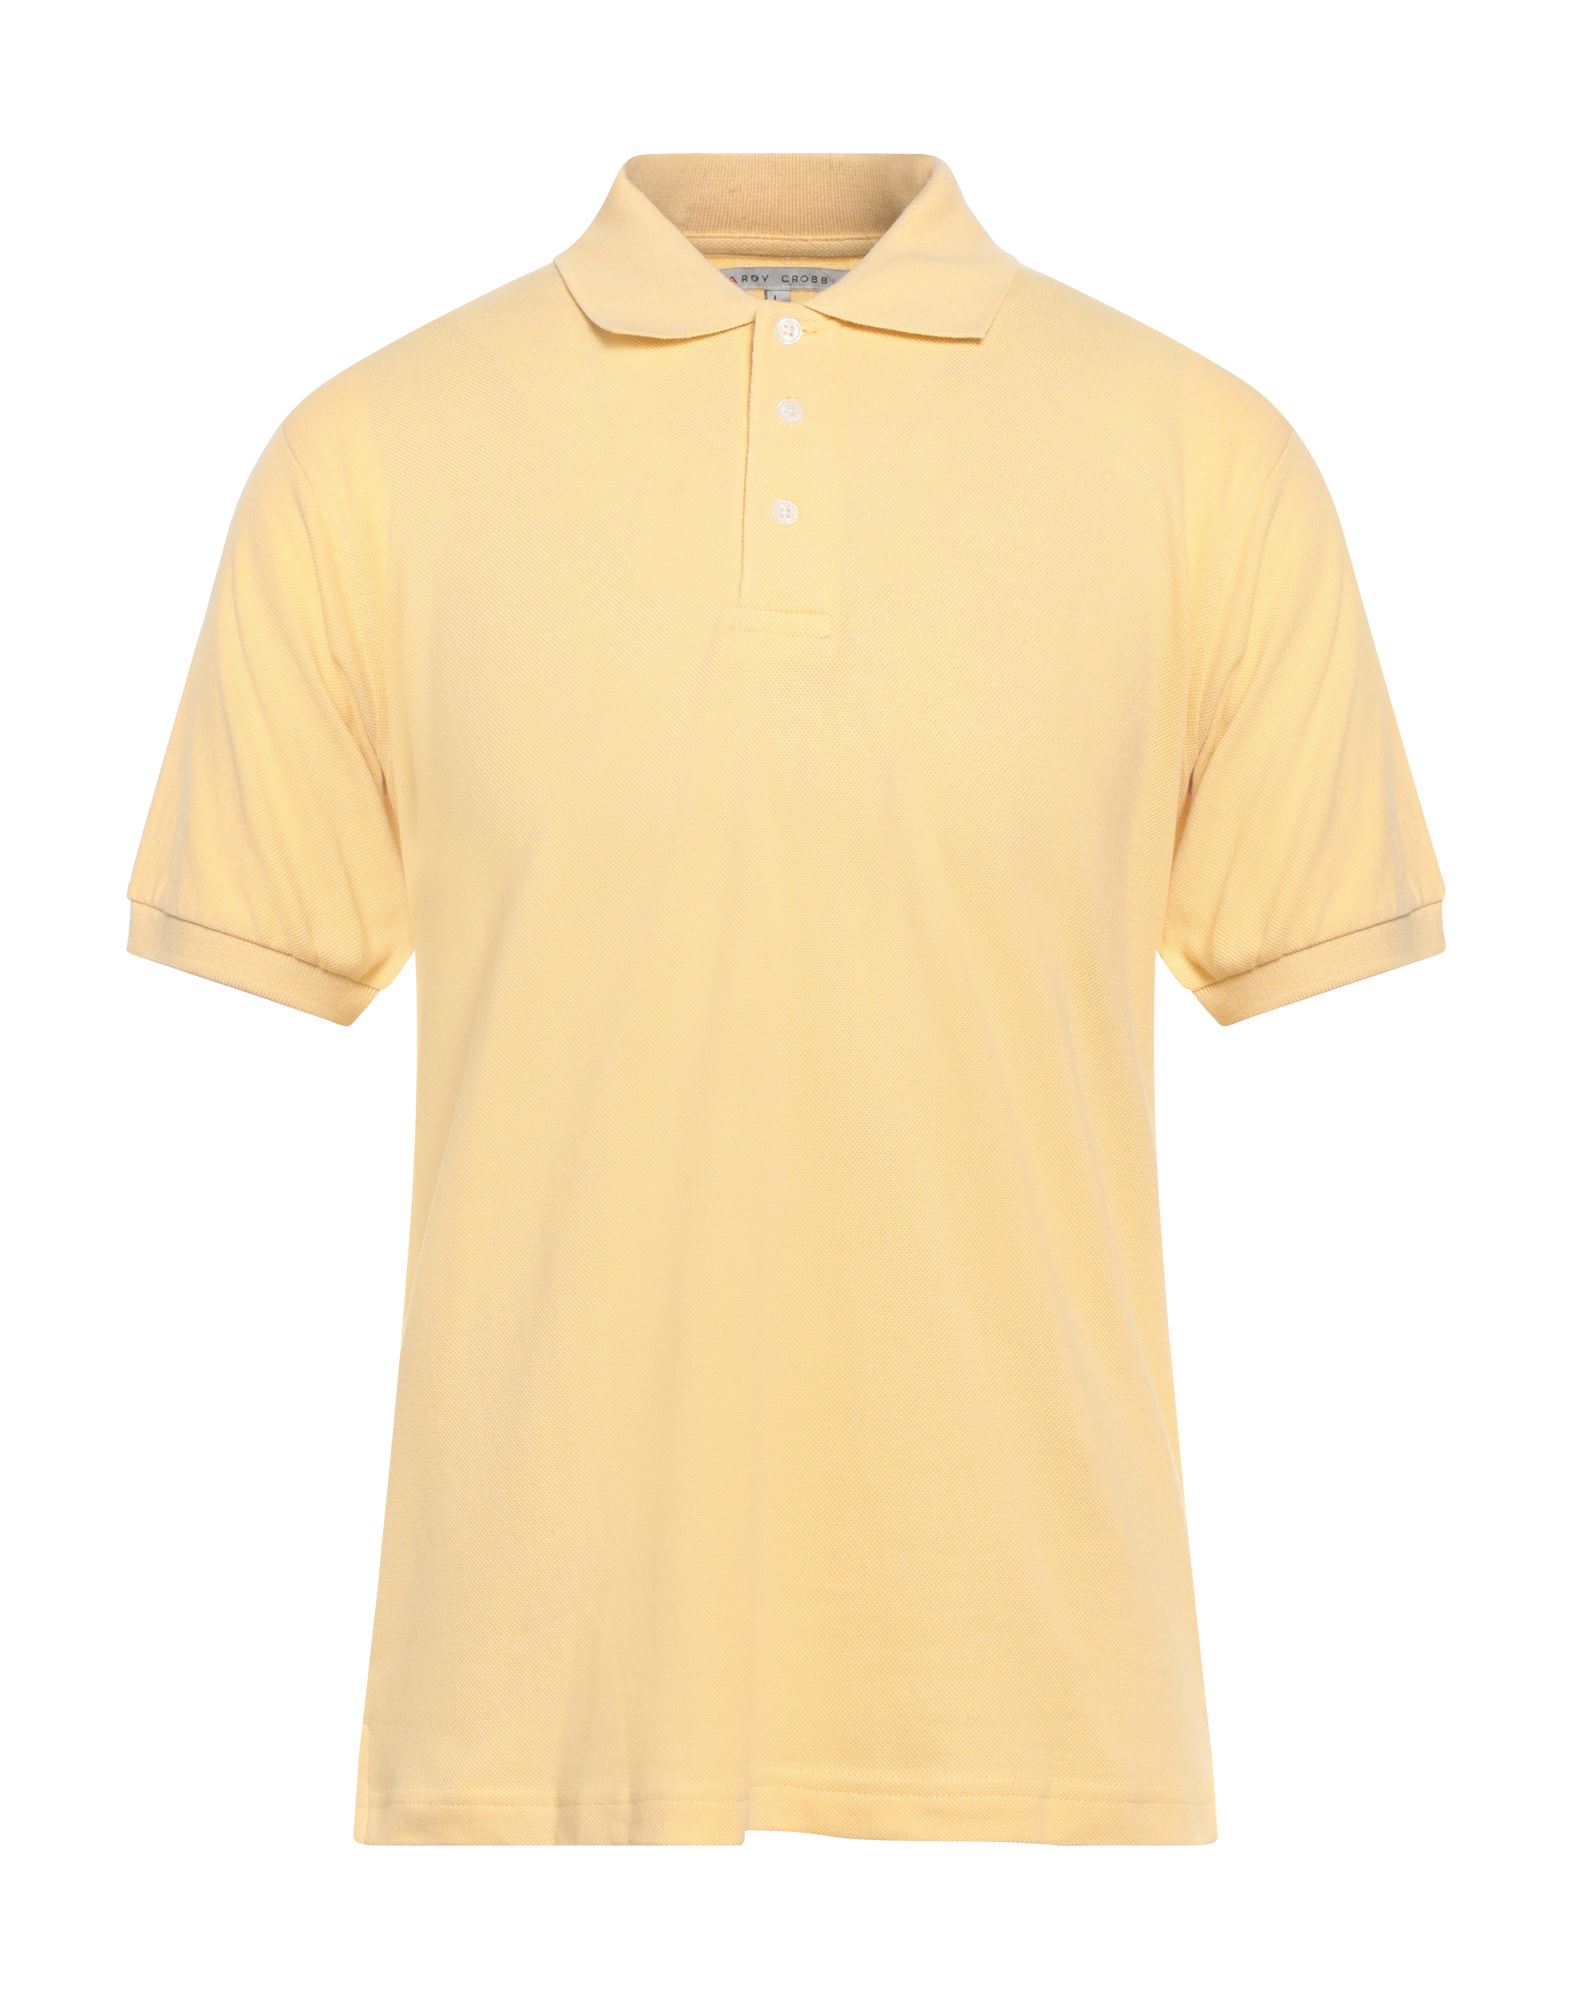 Hardy Crobb's Man Polo Shirt Light Yellow Size L Cotton